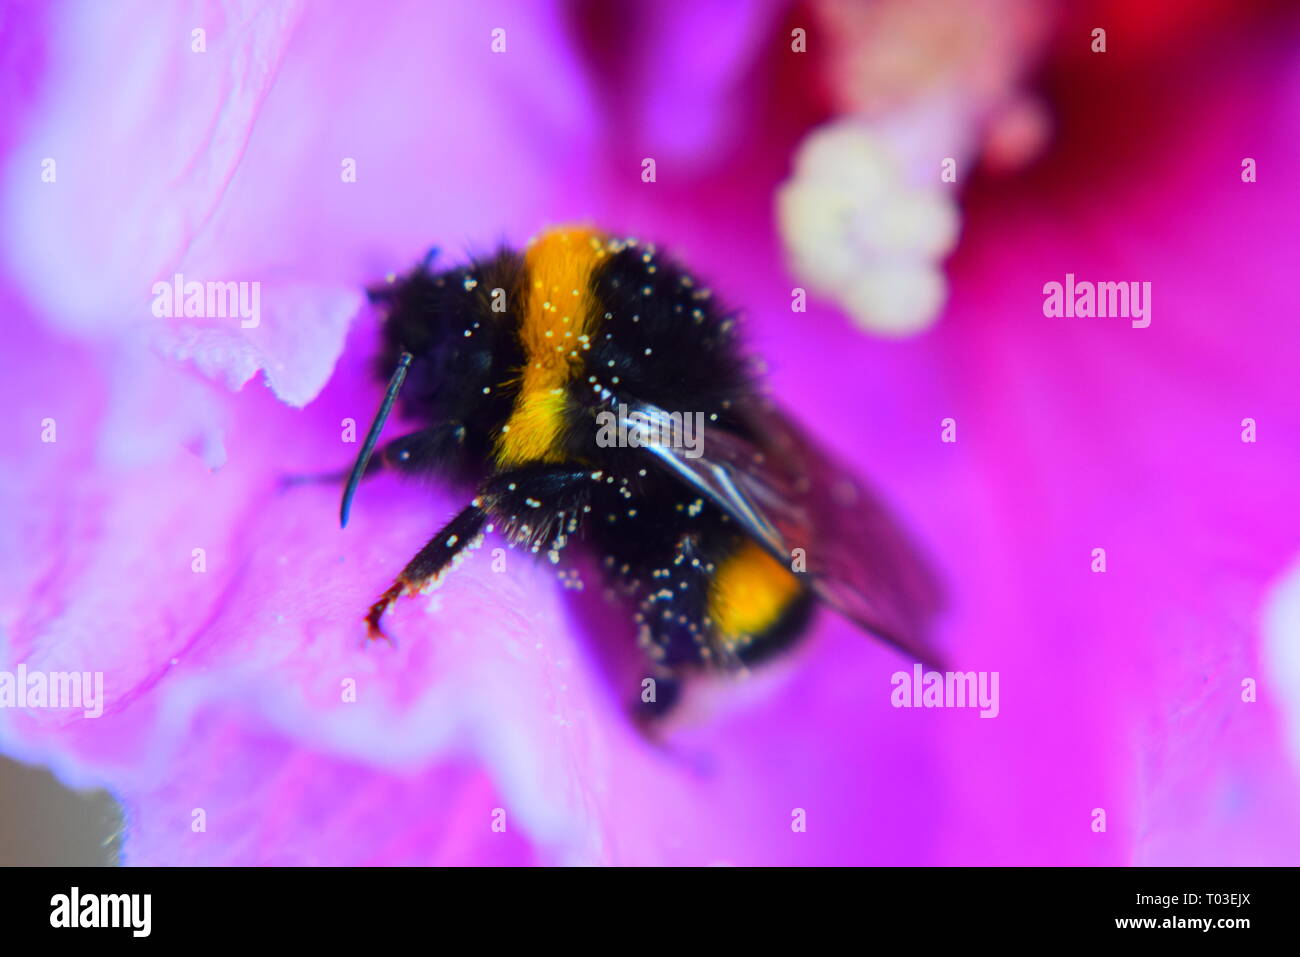 bumble bee pollination on purple flower,amsterdam garden 2016. Stock Photo